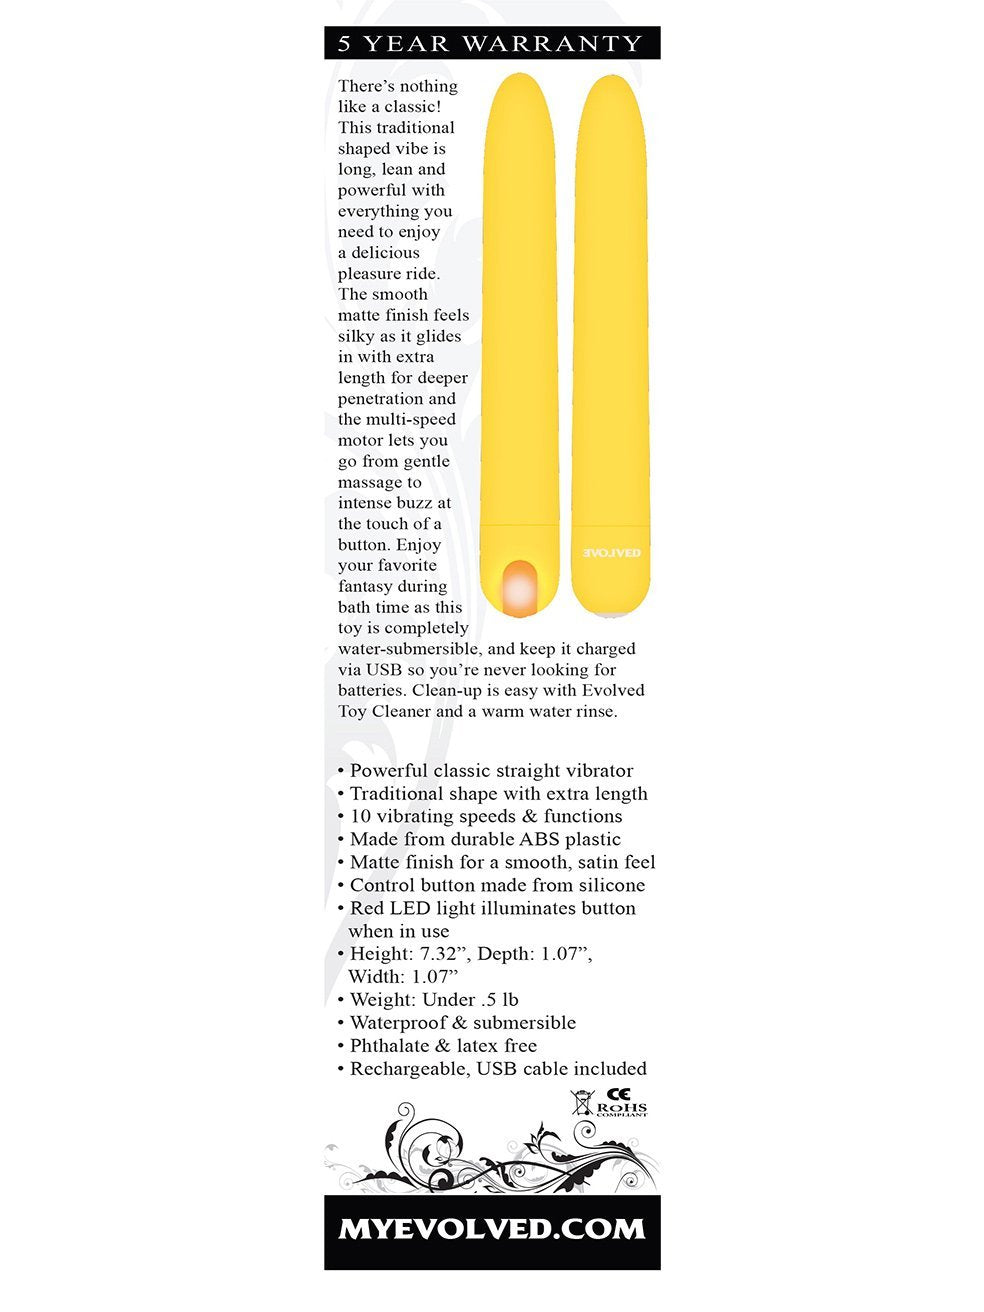 Sunny Sensations Rechargeable Vibrator Vibrators Evolved Novelties Yellow